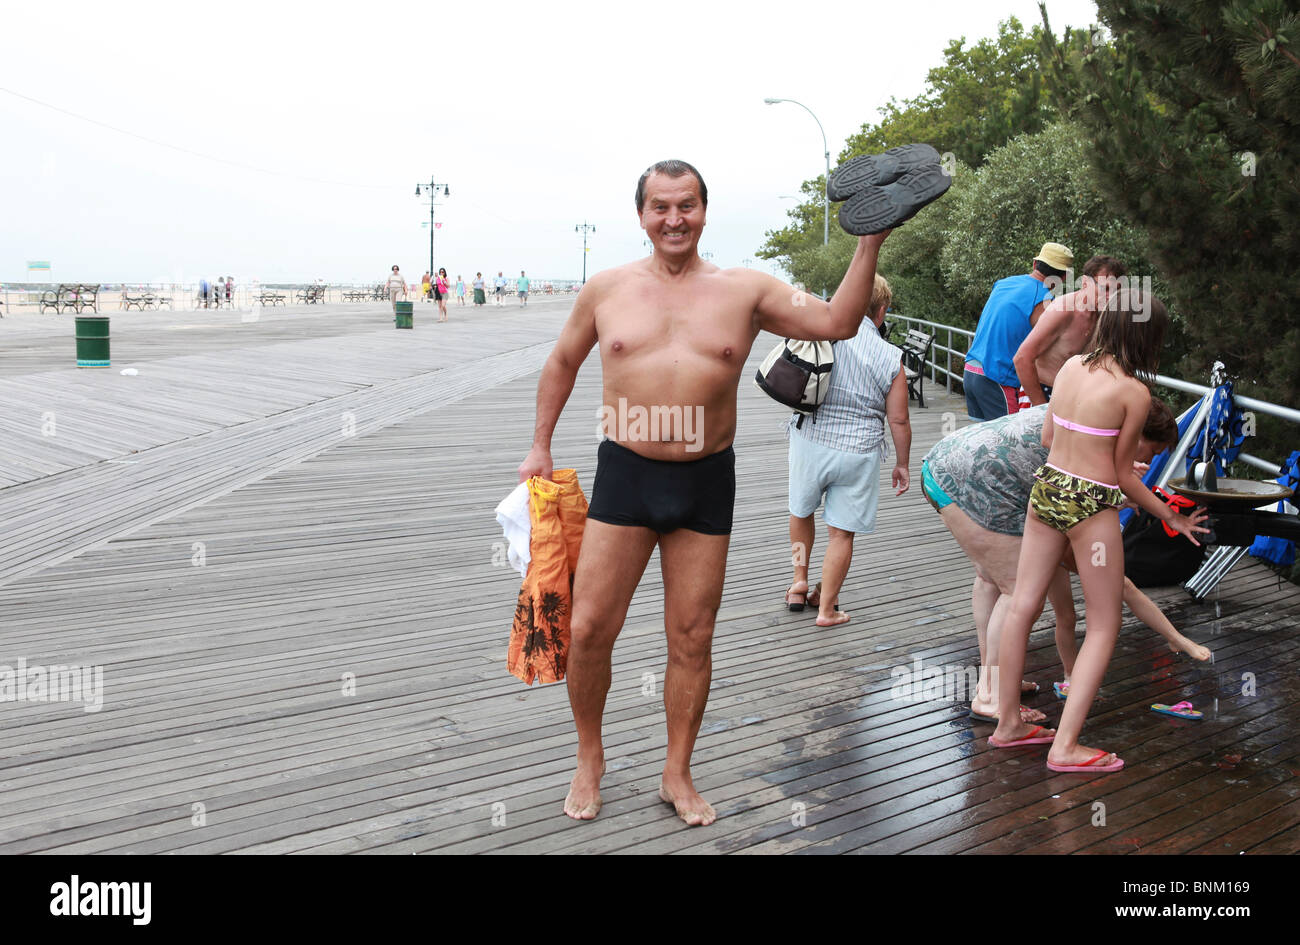 Mann im Badeanzug mit Sandalen posiert Stockfotografie - Alamy